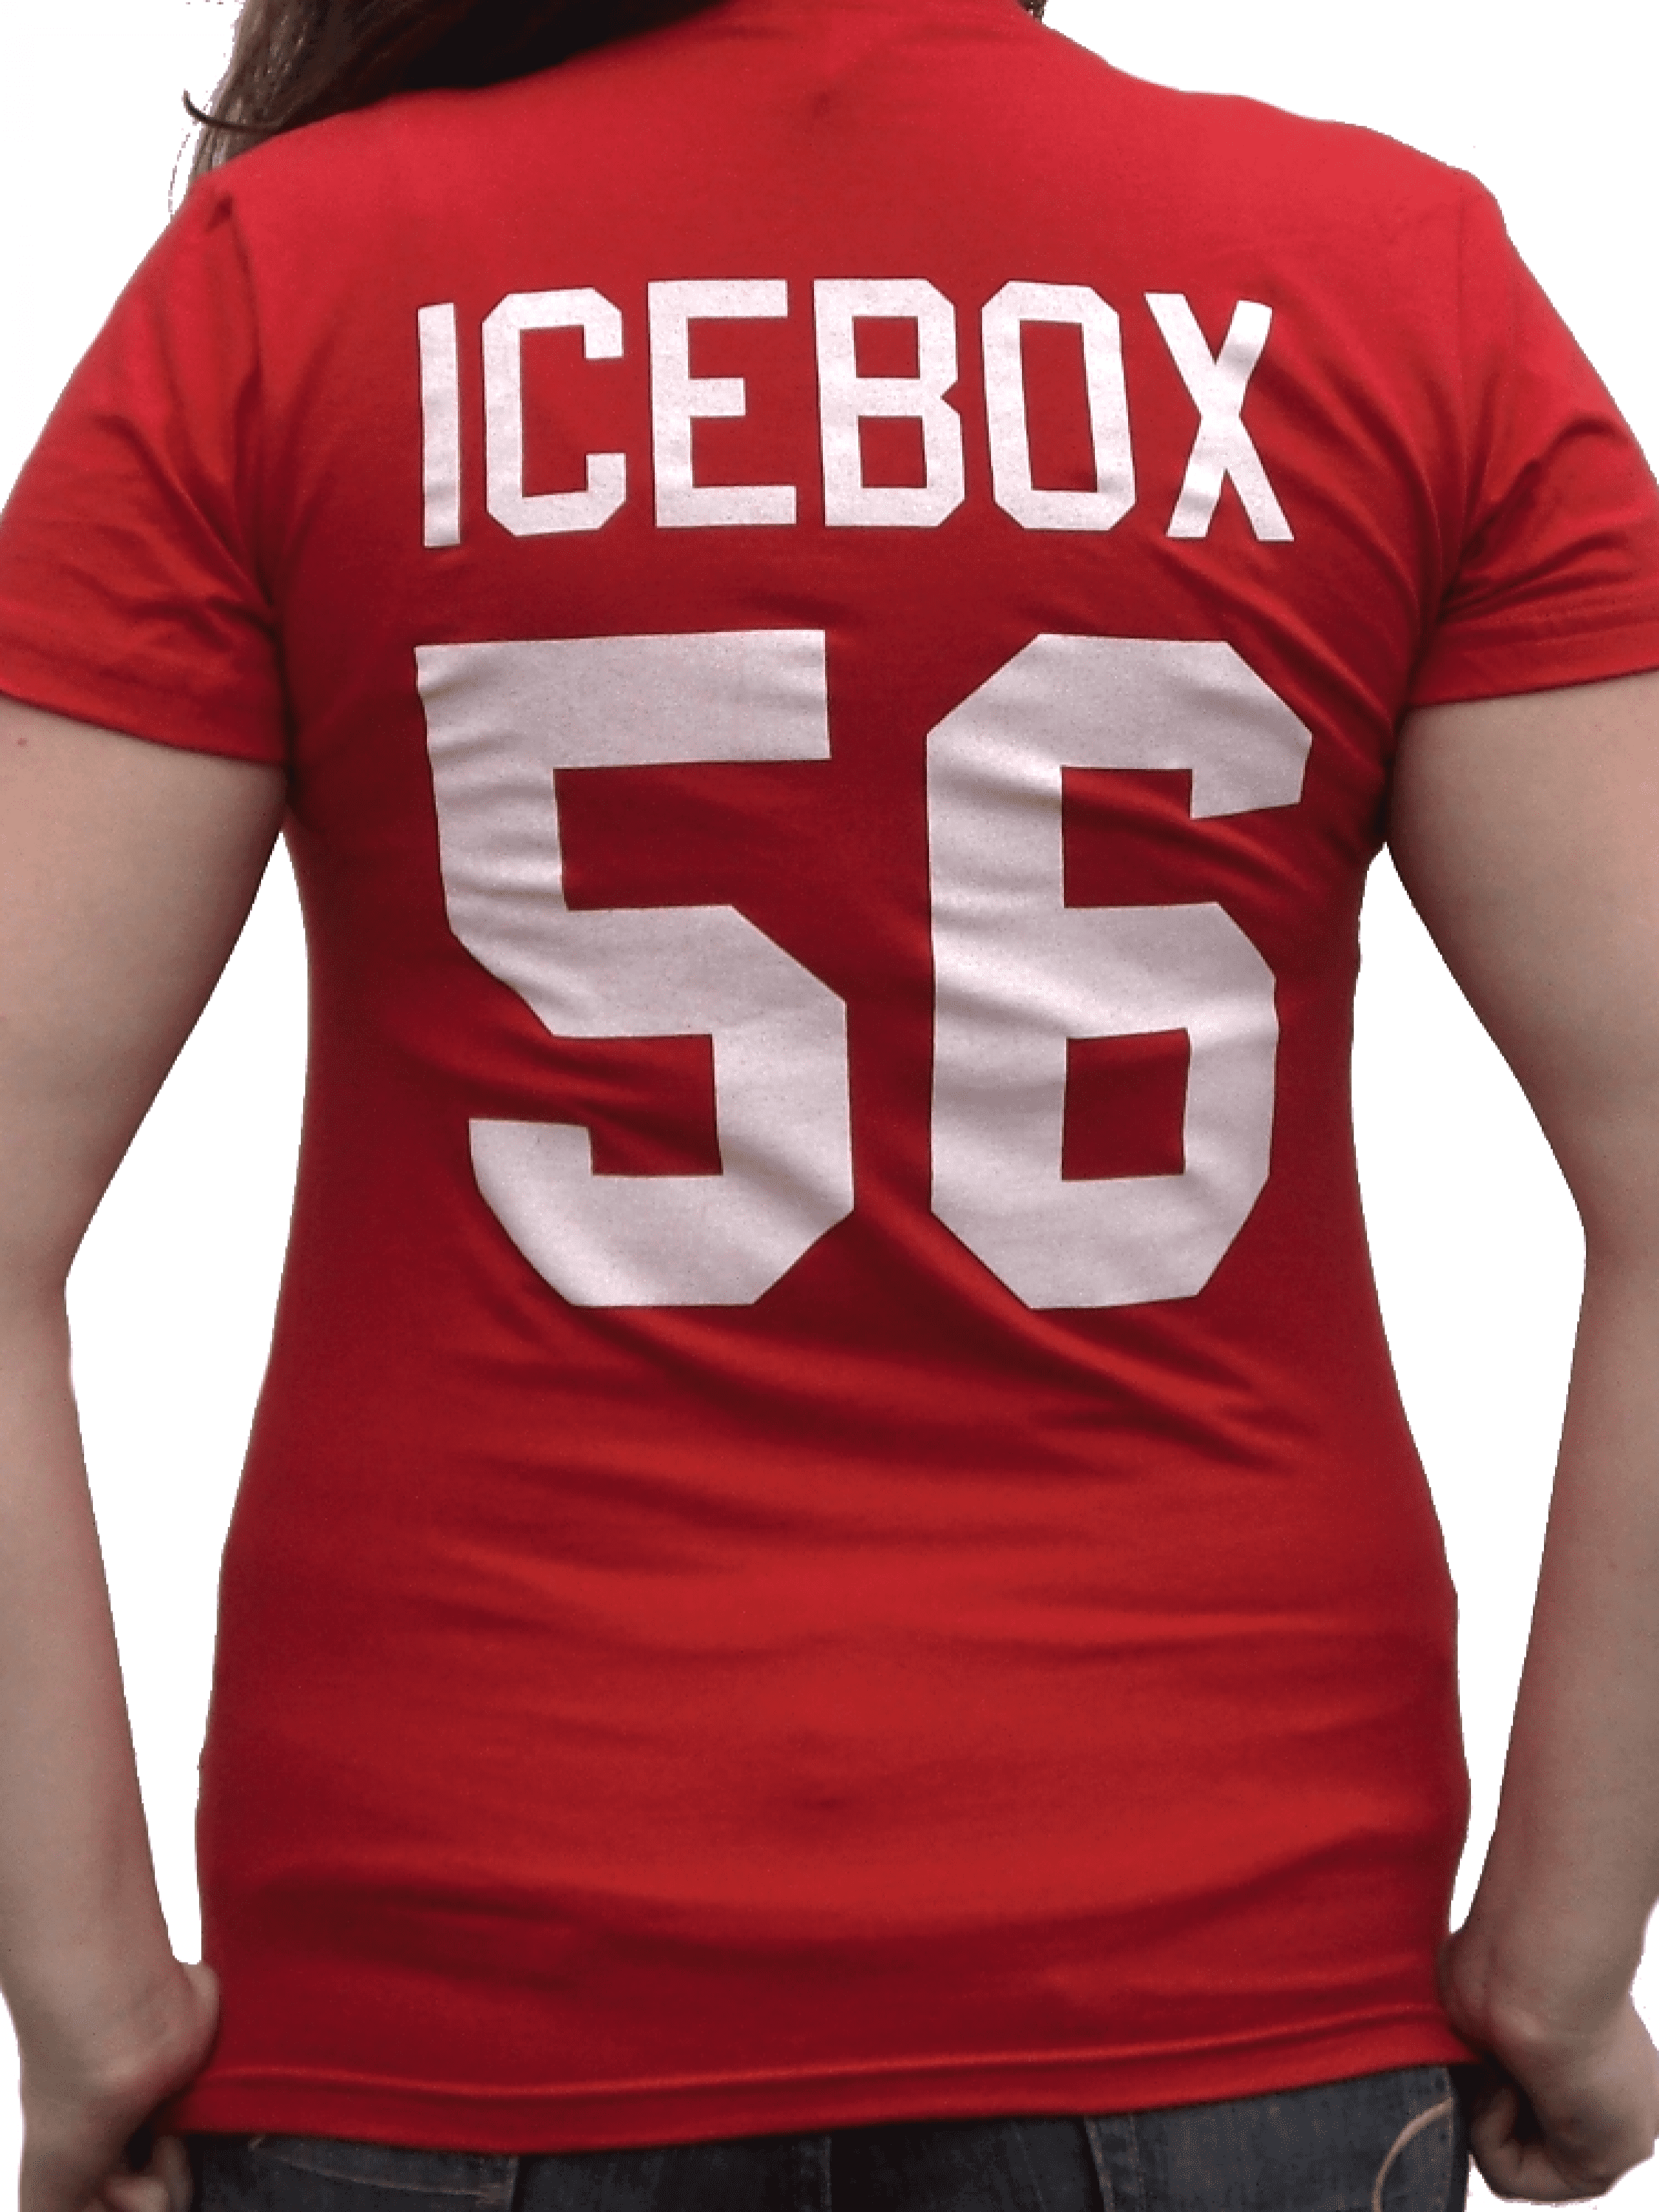 Your Team Men's IceBox #56 Movie Football Jersey for Men Kids 